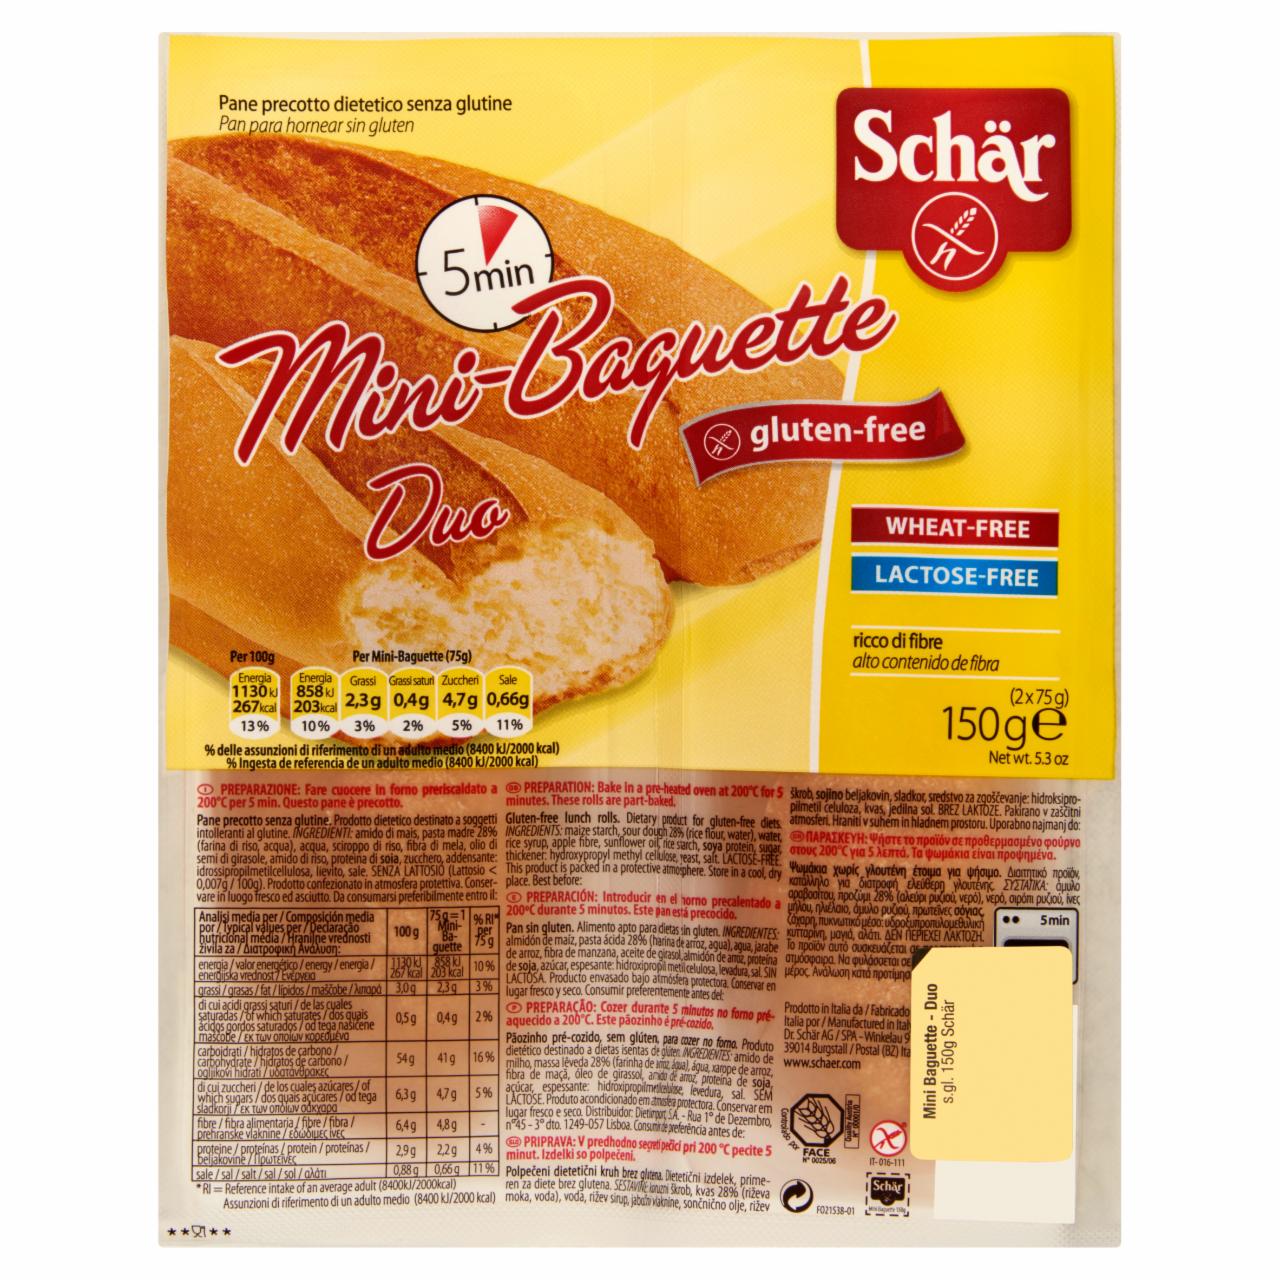 Képek - Schär elősütött gluténmentes mini bagett 2 x 75 g (150 g)